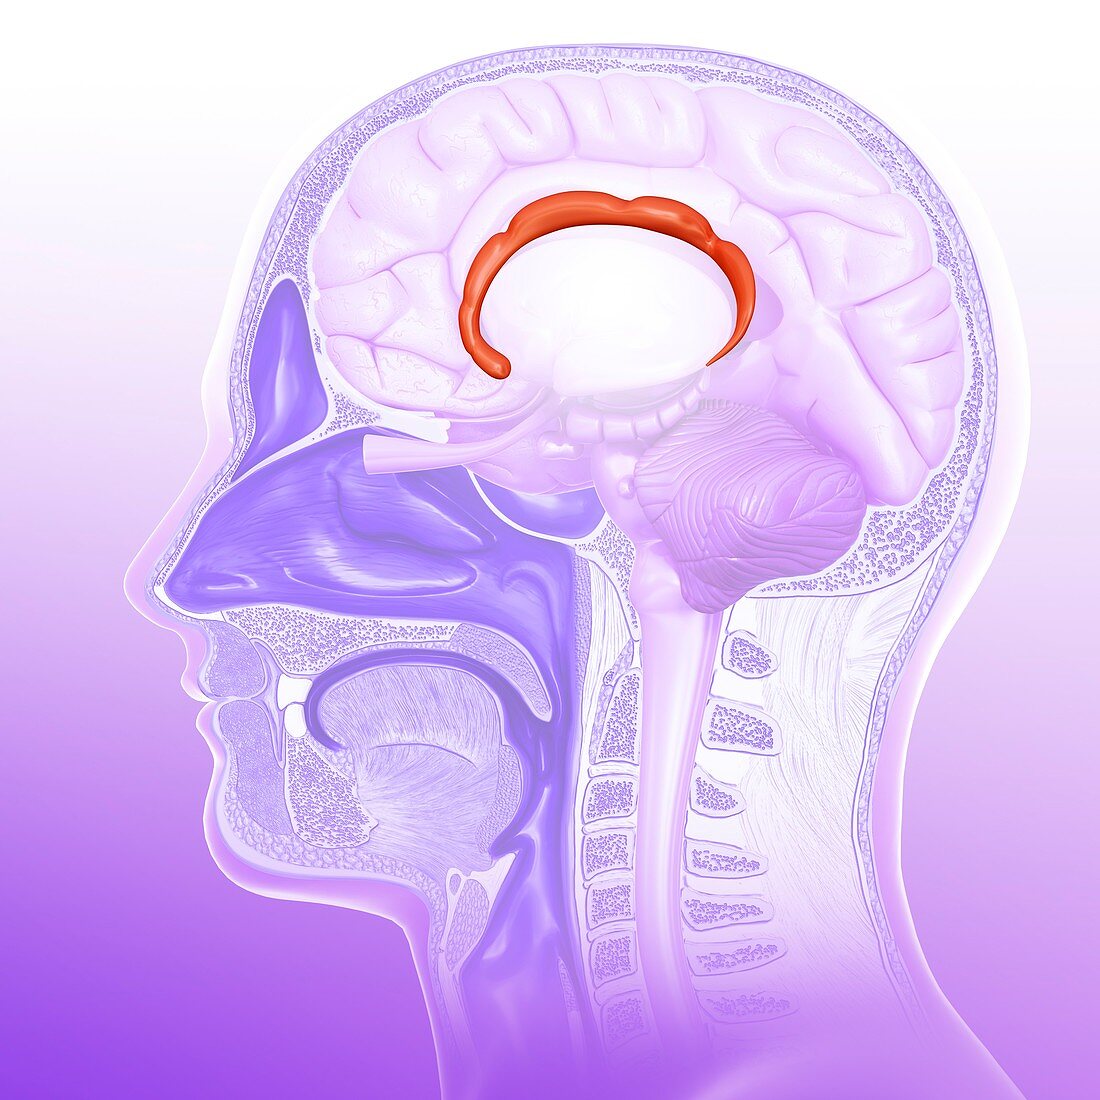 Human brain cingulate gyrus, illustration